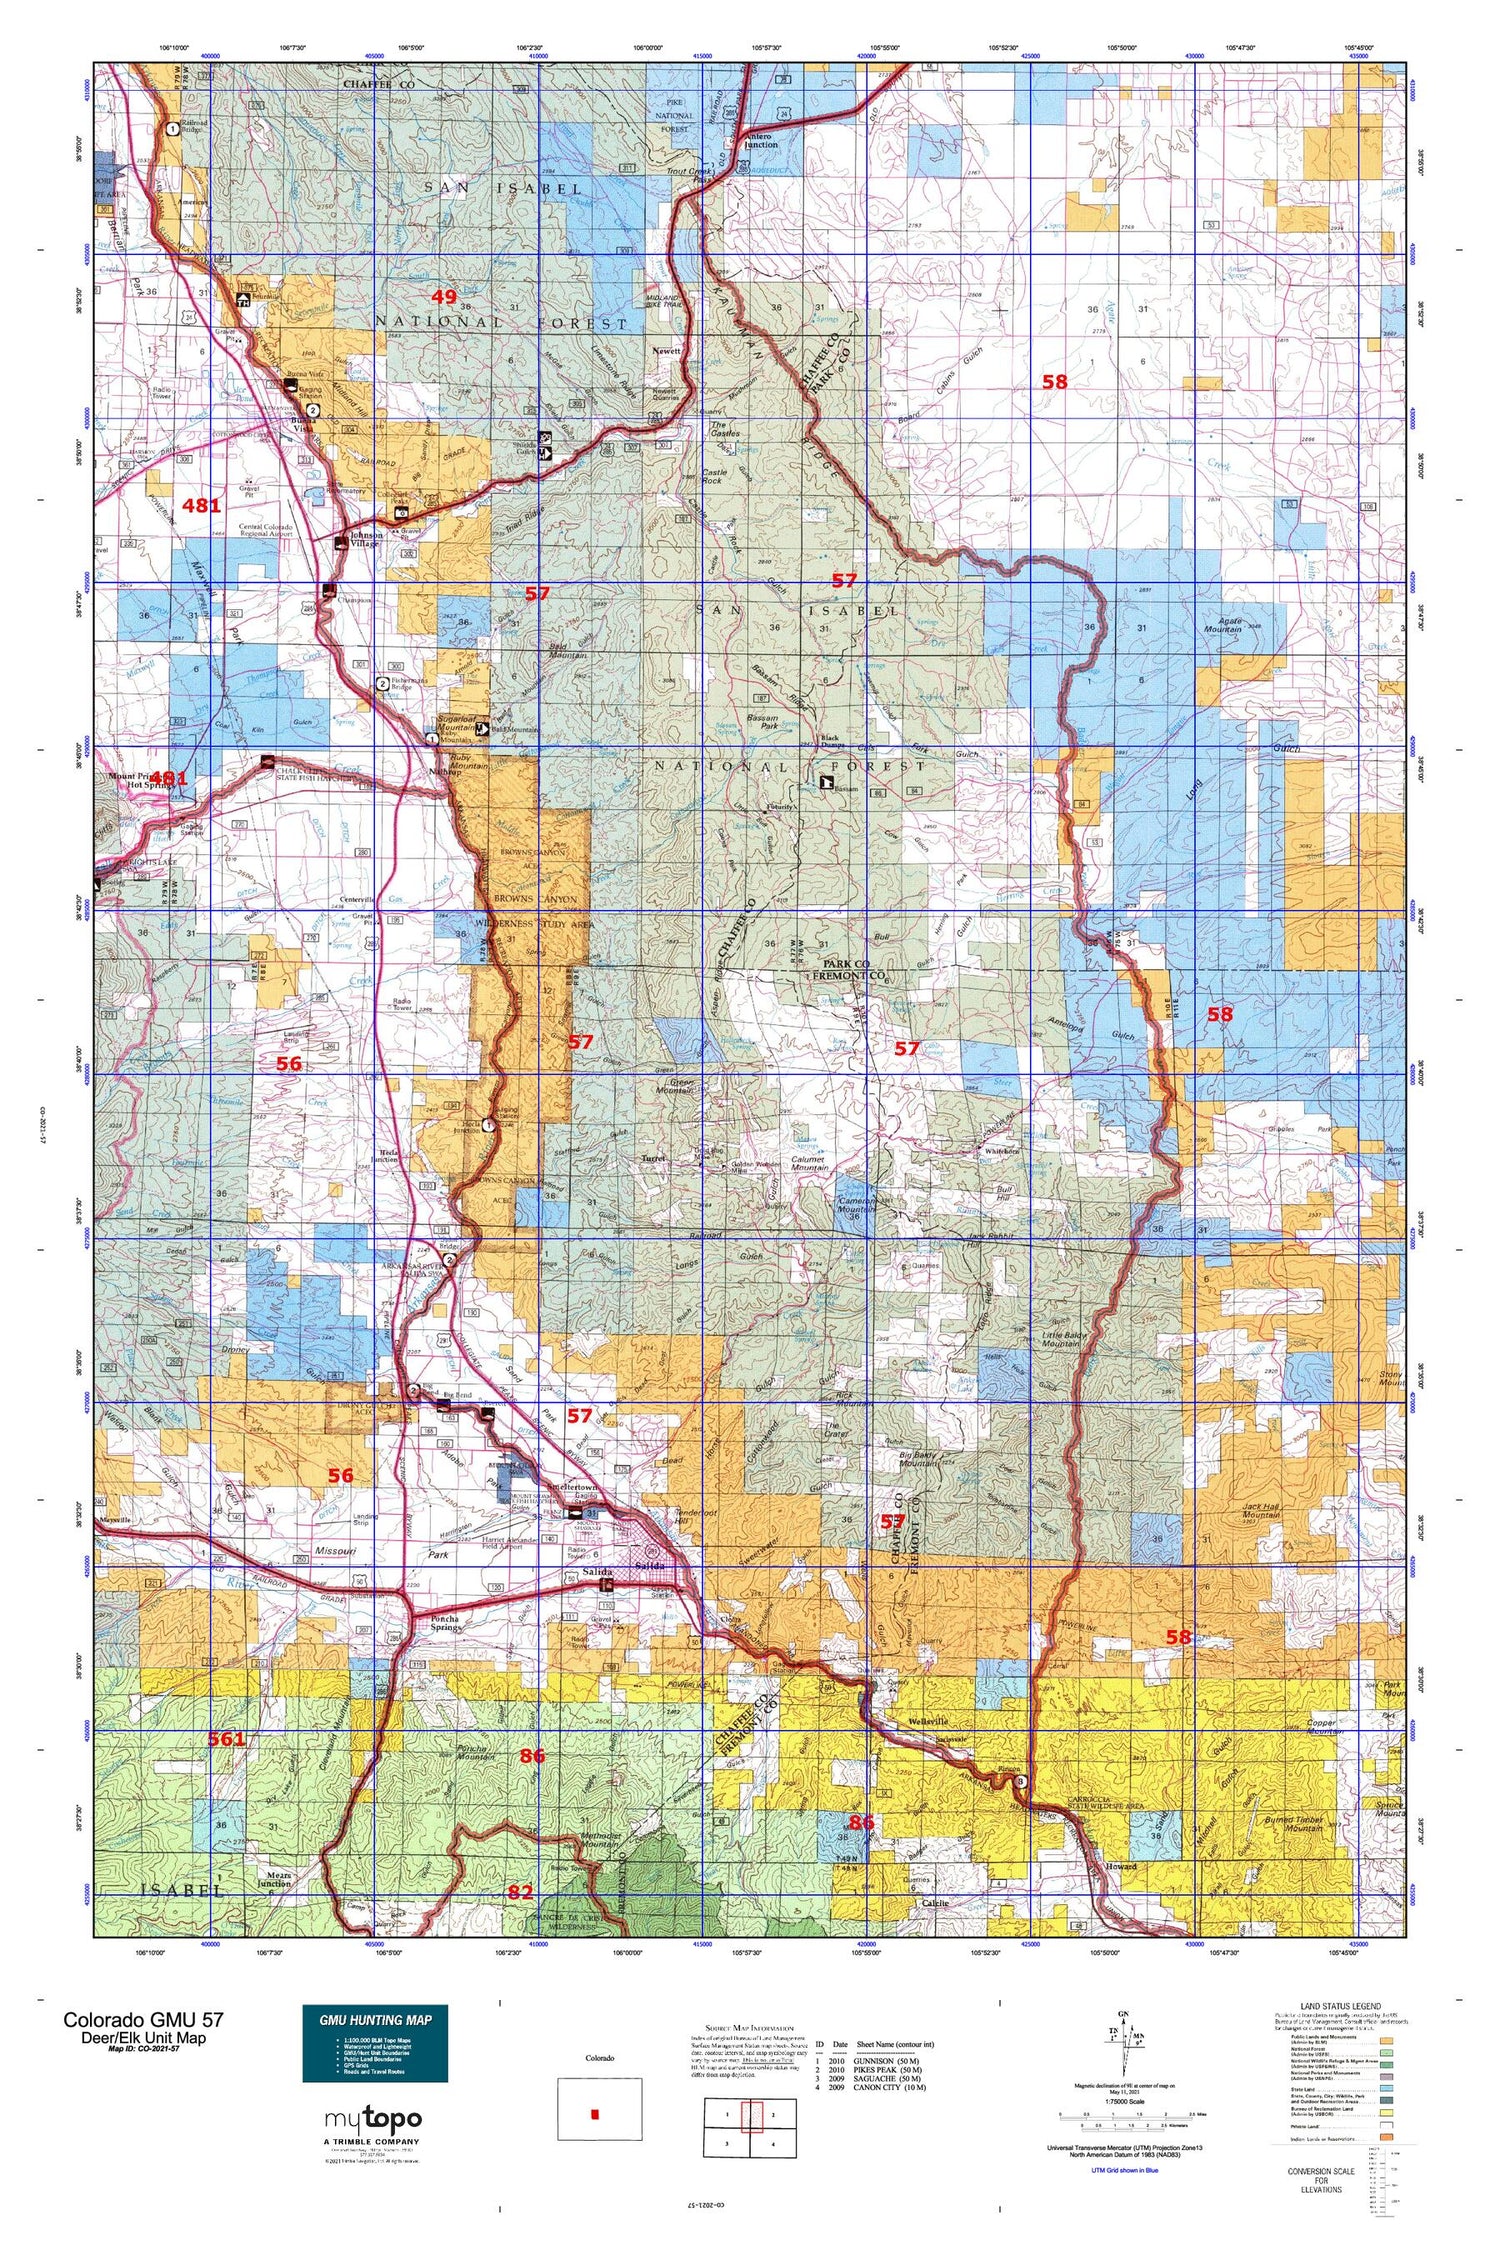 Colorado GMU 57 Map Image